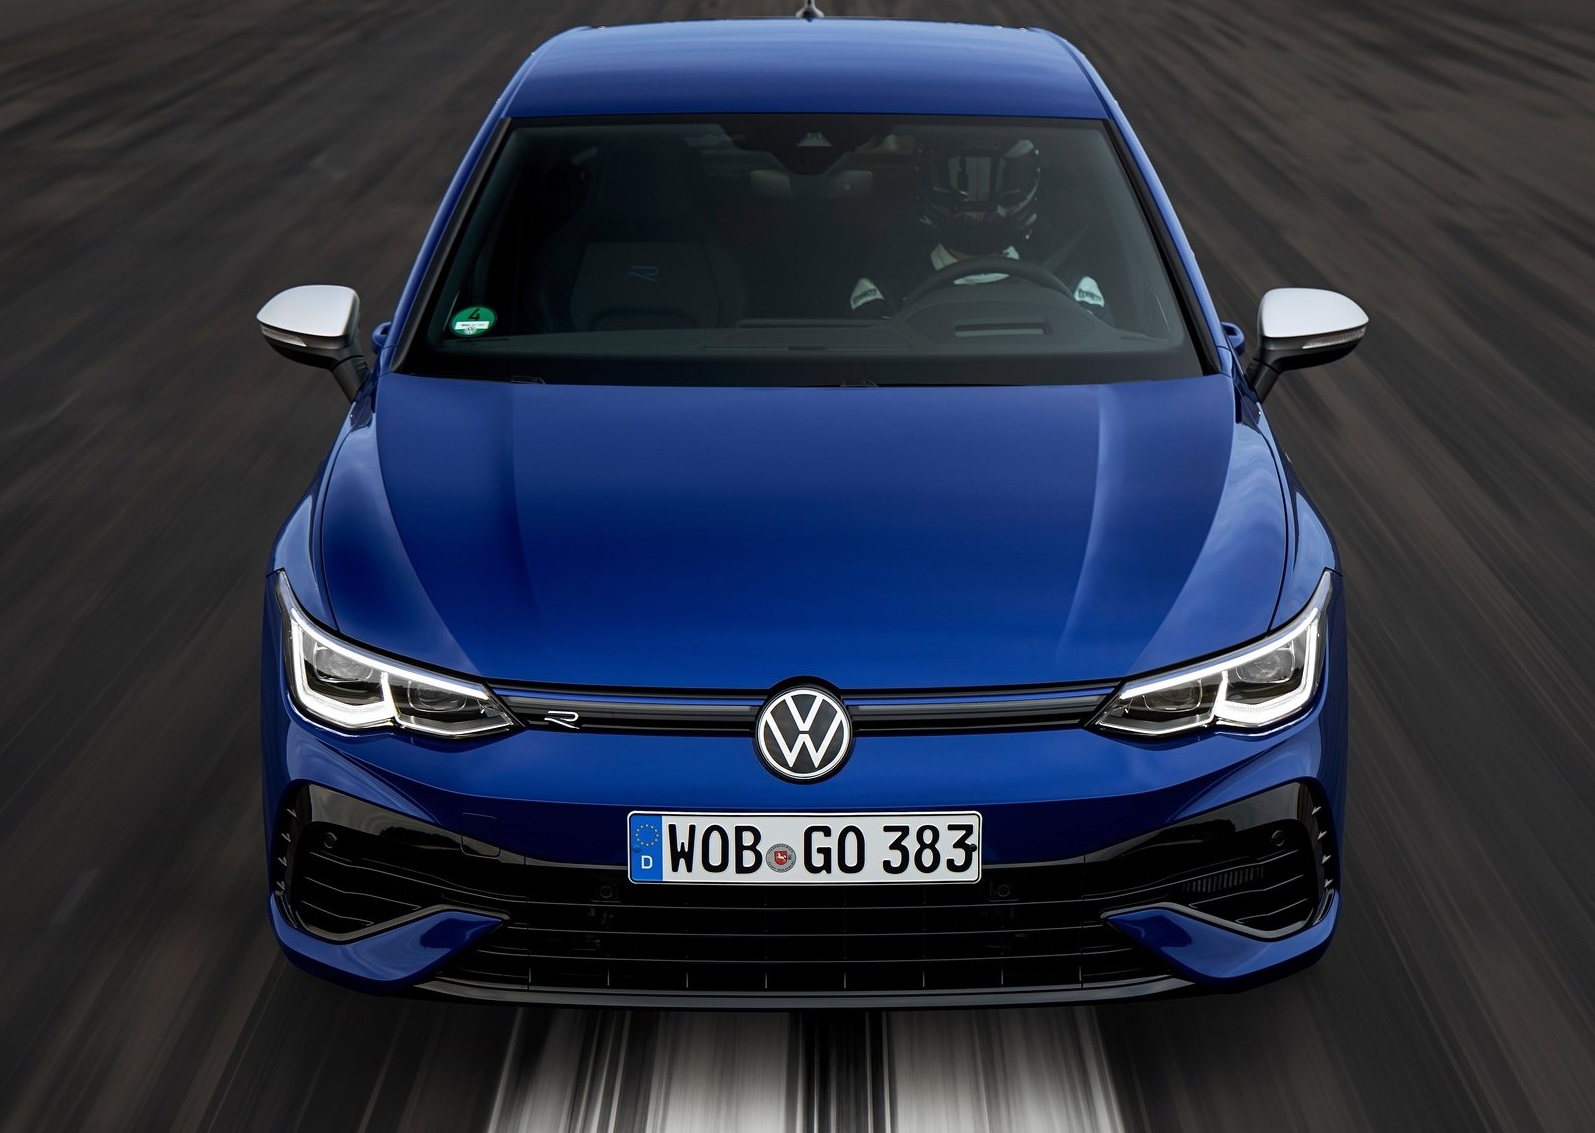 H Volkswagen σταματά την εξέλιξη νέων θερμικών κινητήρων